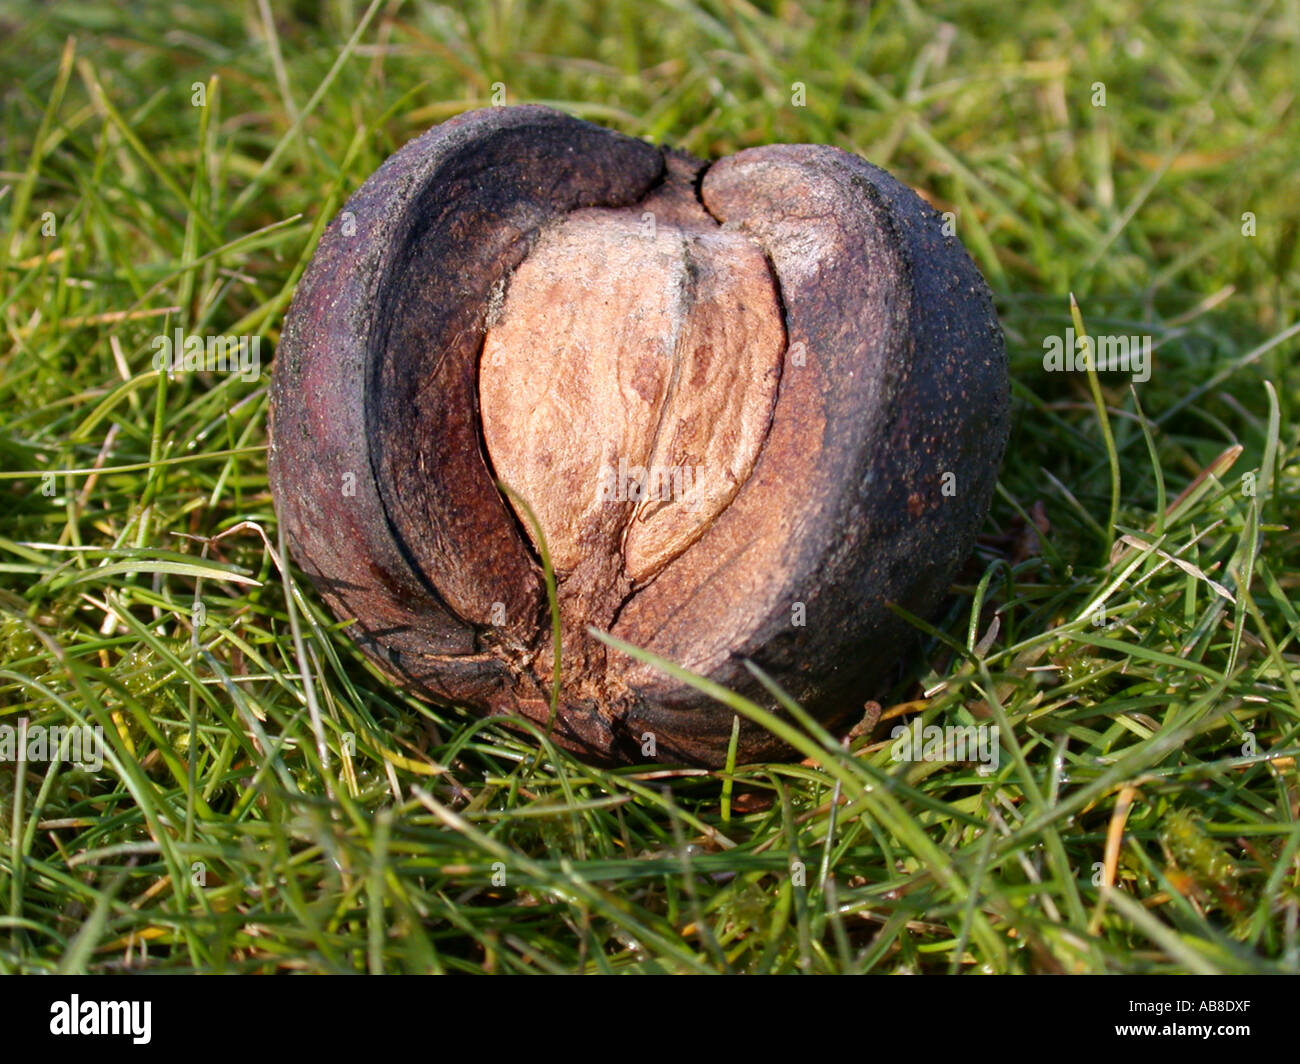 shag-bark hickory, shagbark hickory (Carya ovata), fruit with husk in the grass lying on the ground Stock Photo